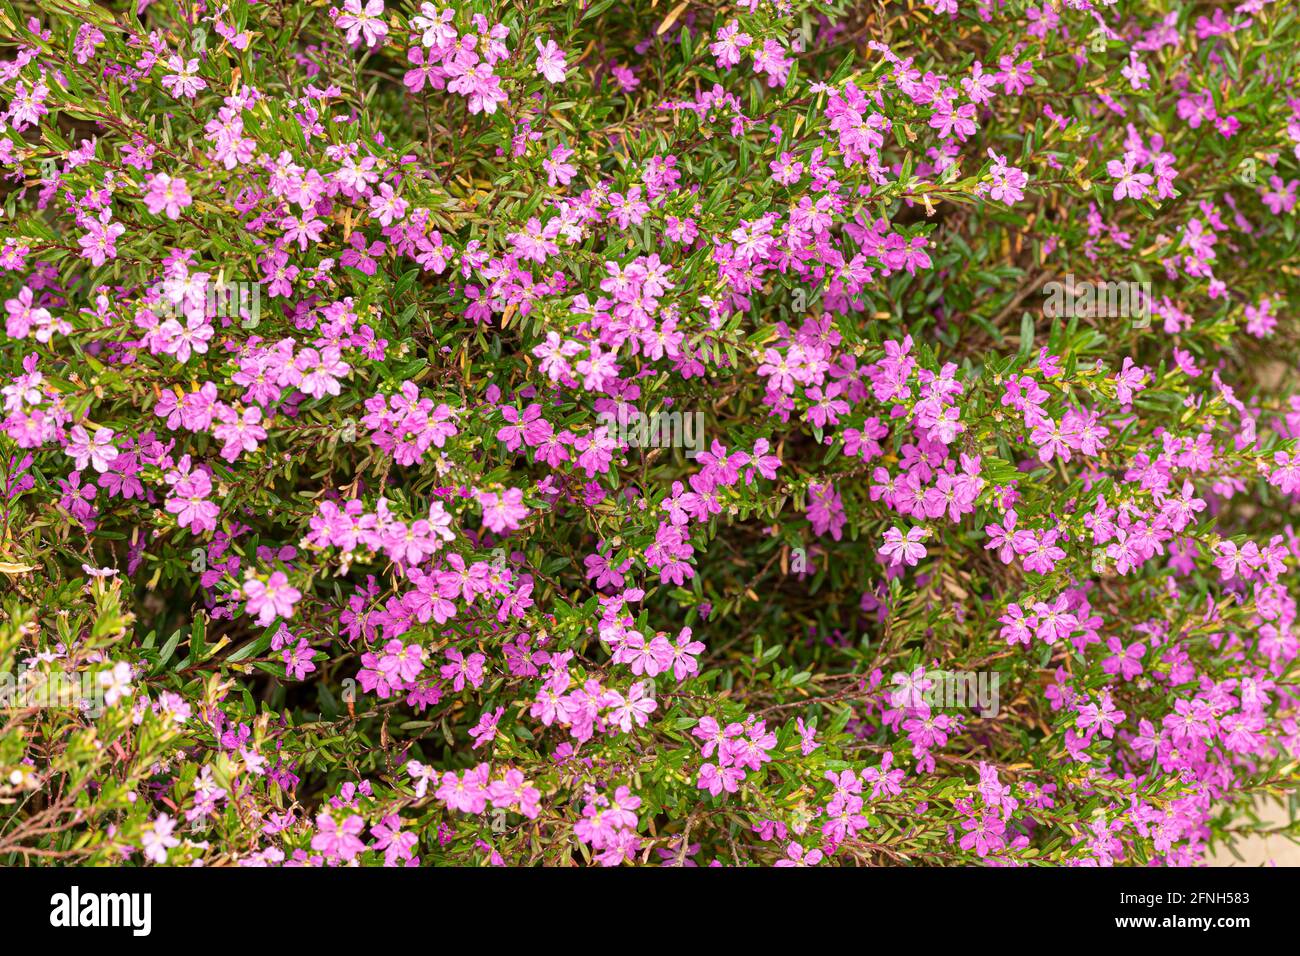 Wild thyme herb in bloom in a garden Stock Photo